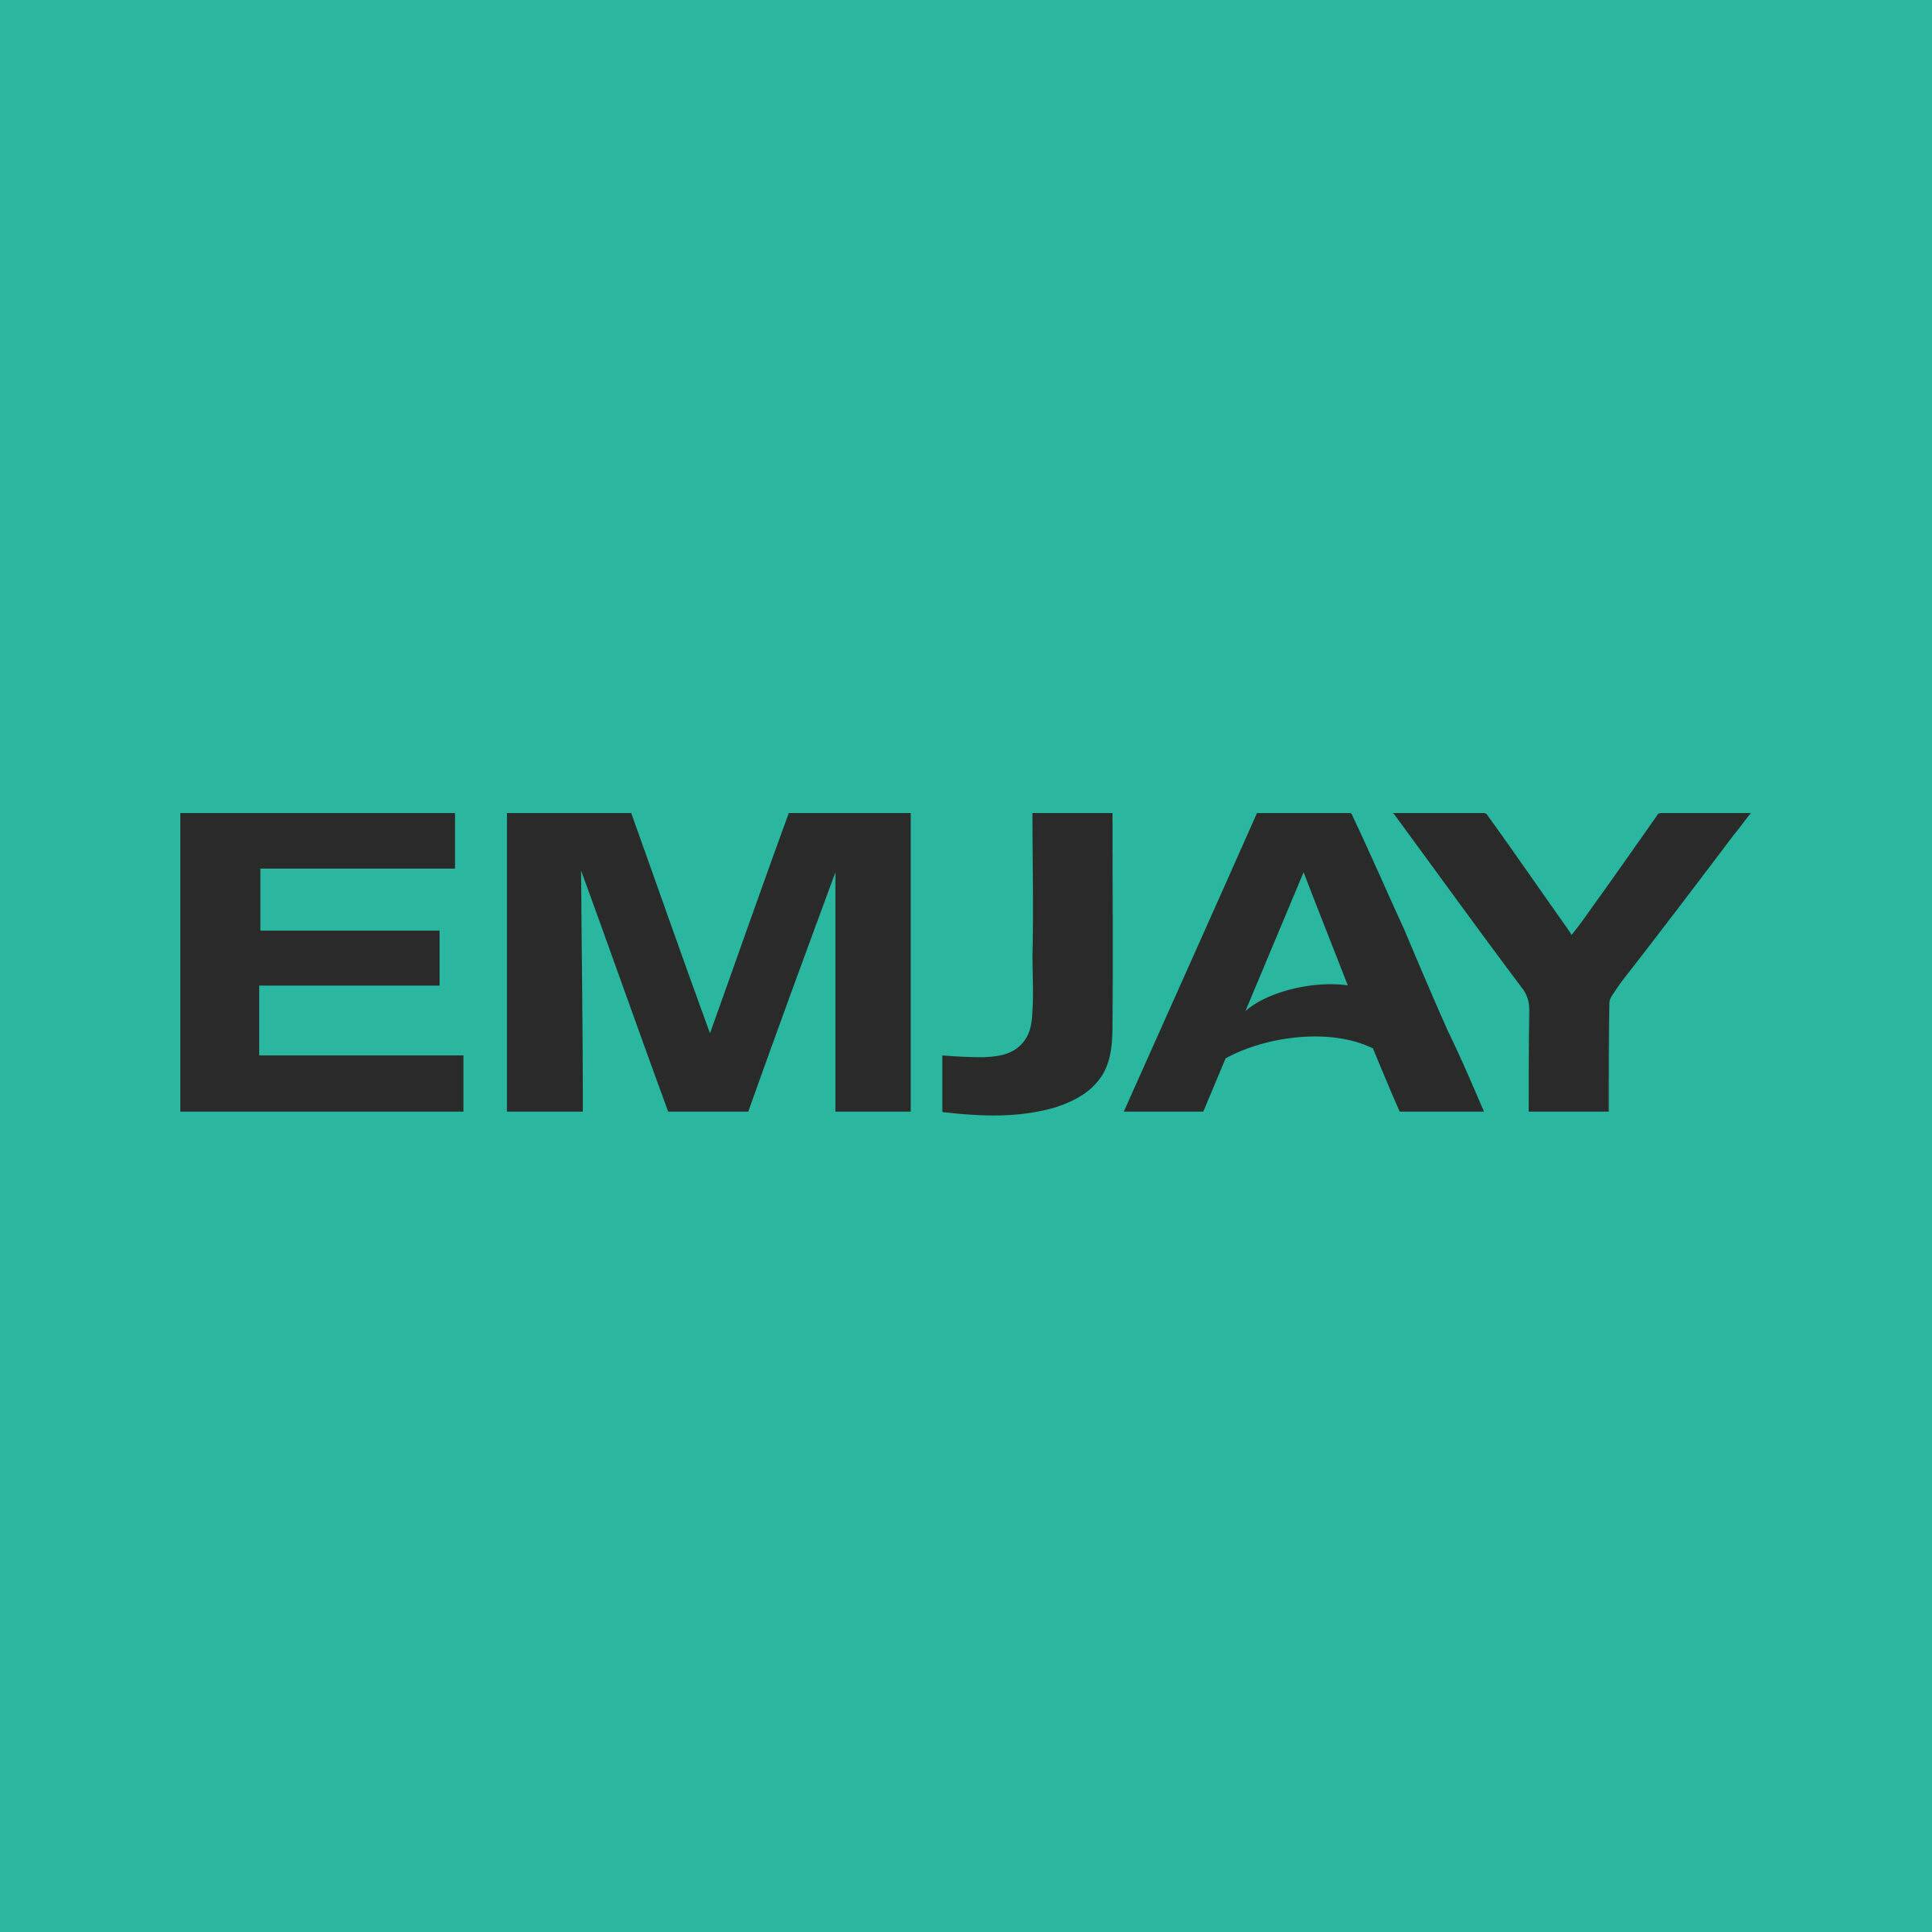 Emjay Los Angeles logo